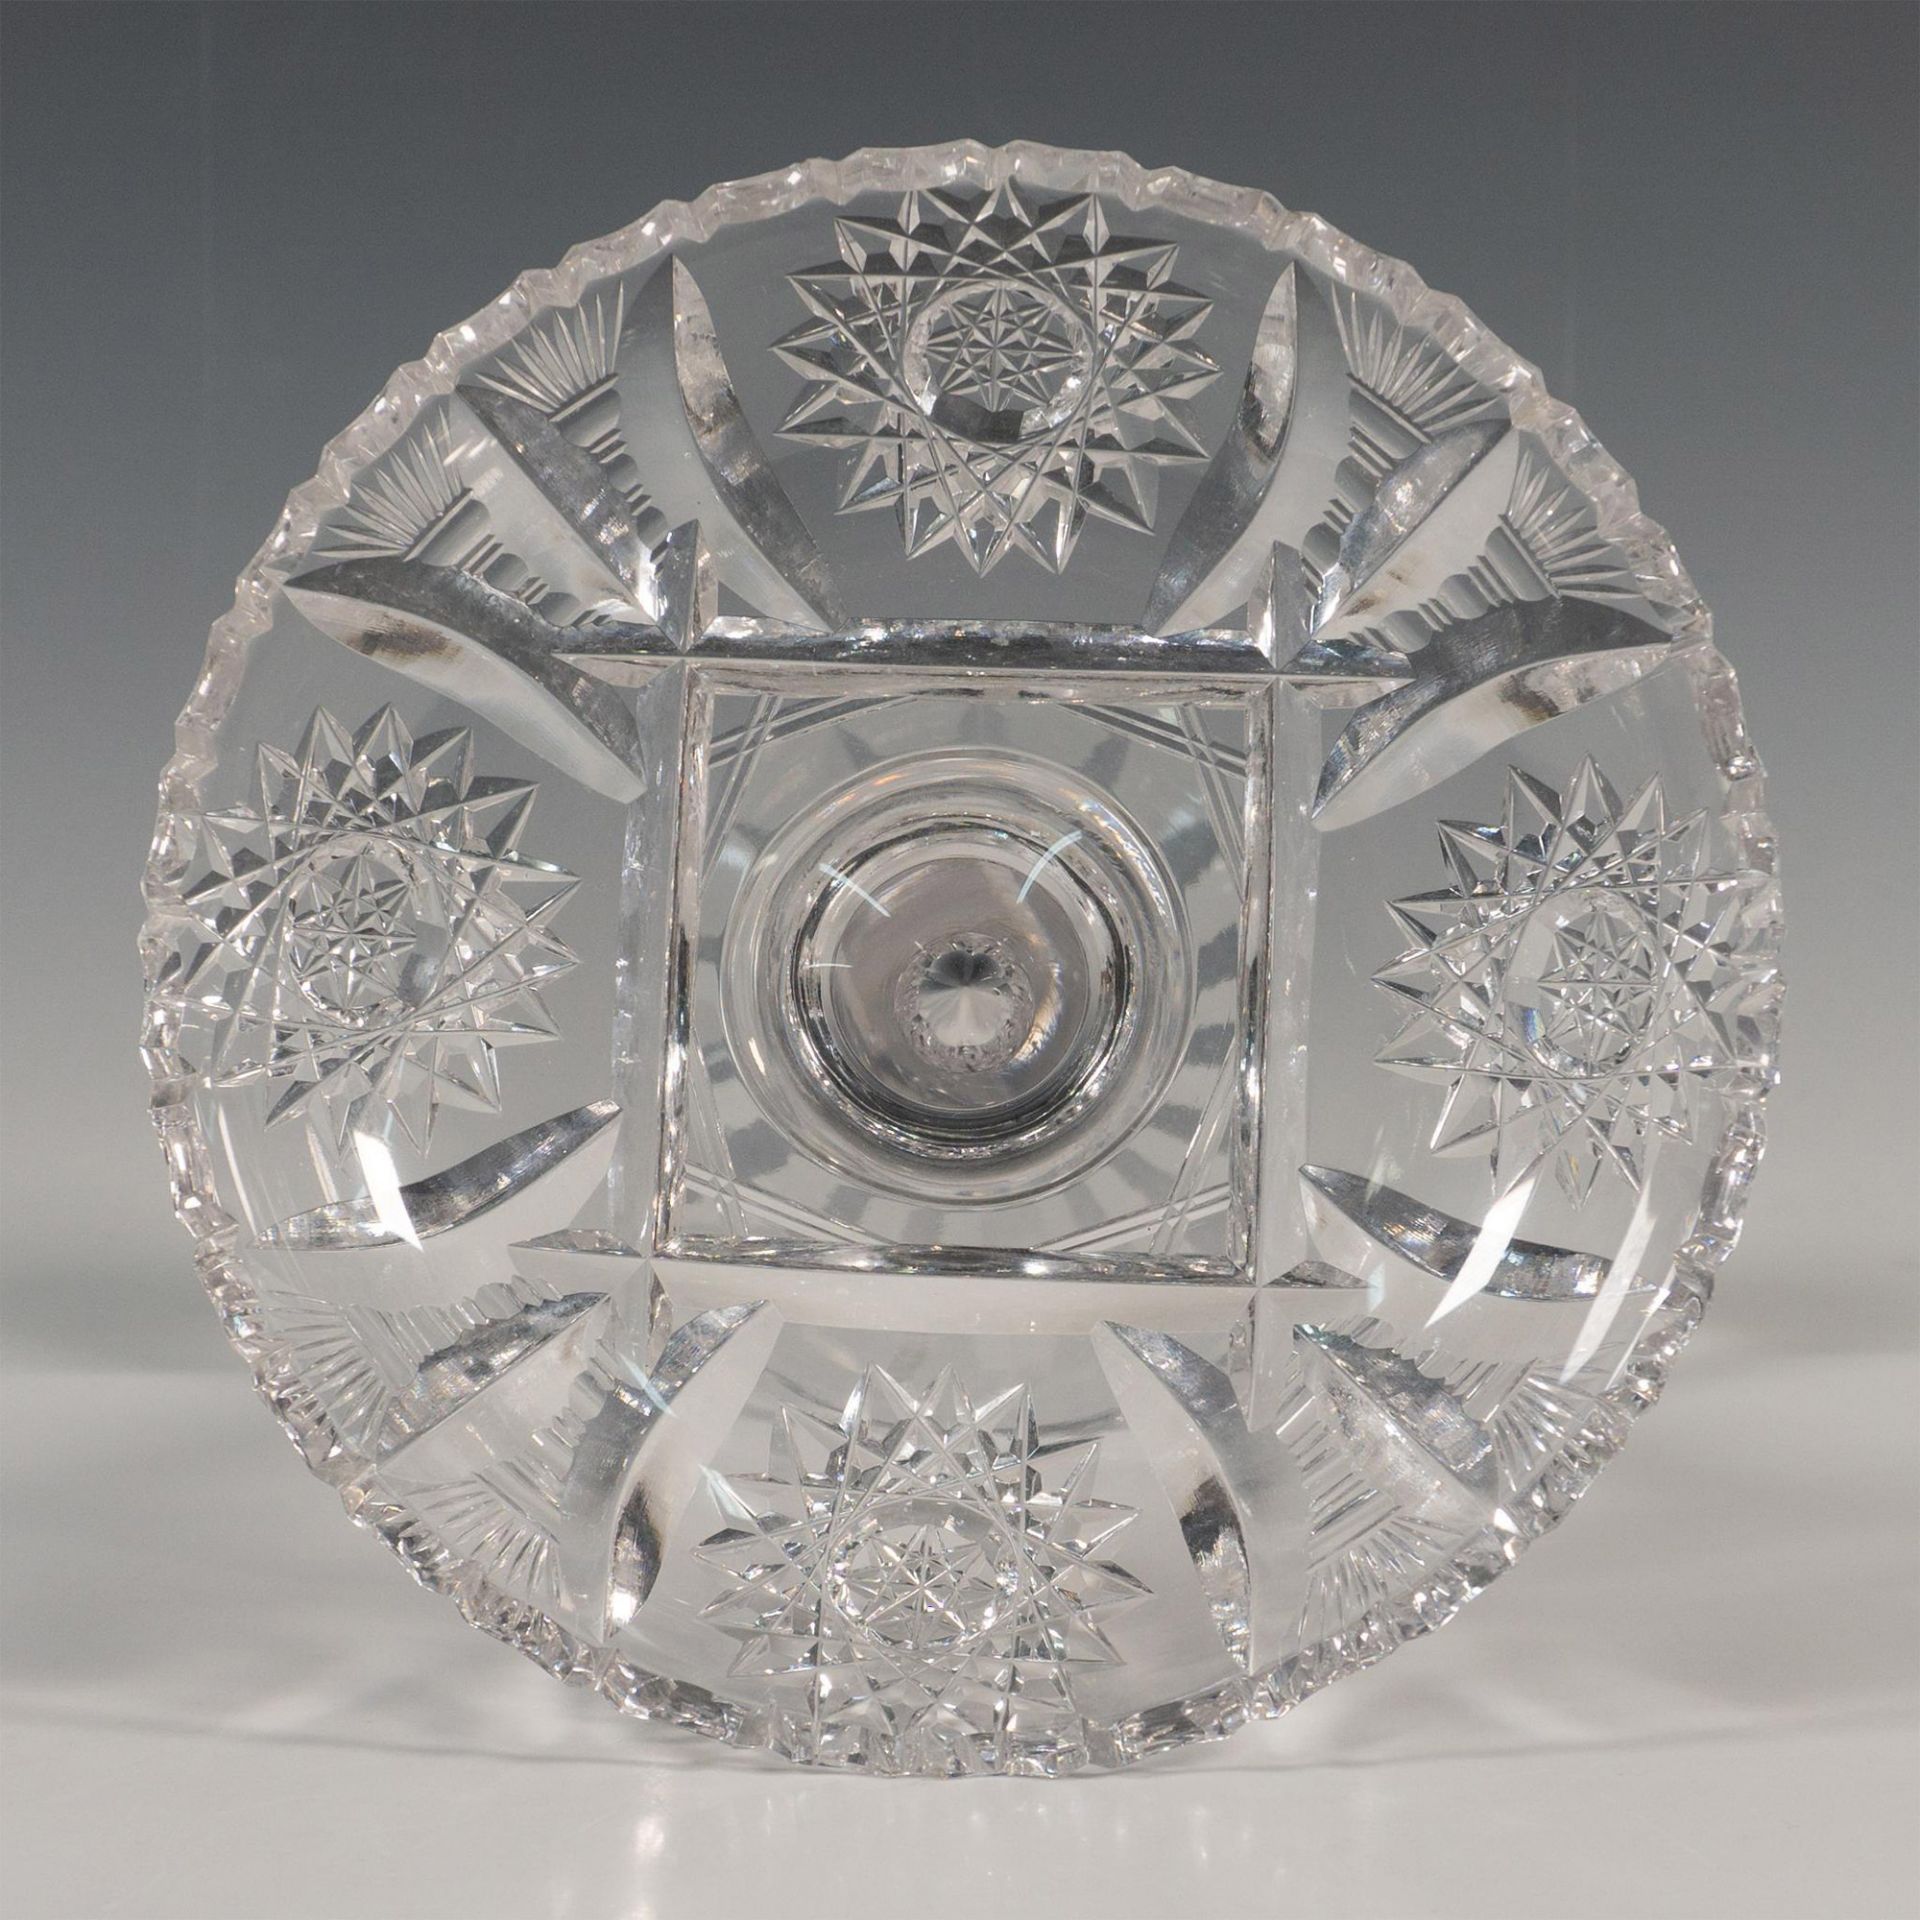 Vintage Cut Lead Glass Pedestal Compote Dish - Image 3 of 5